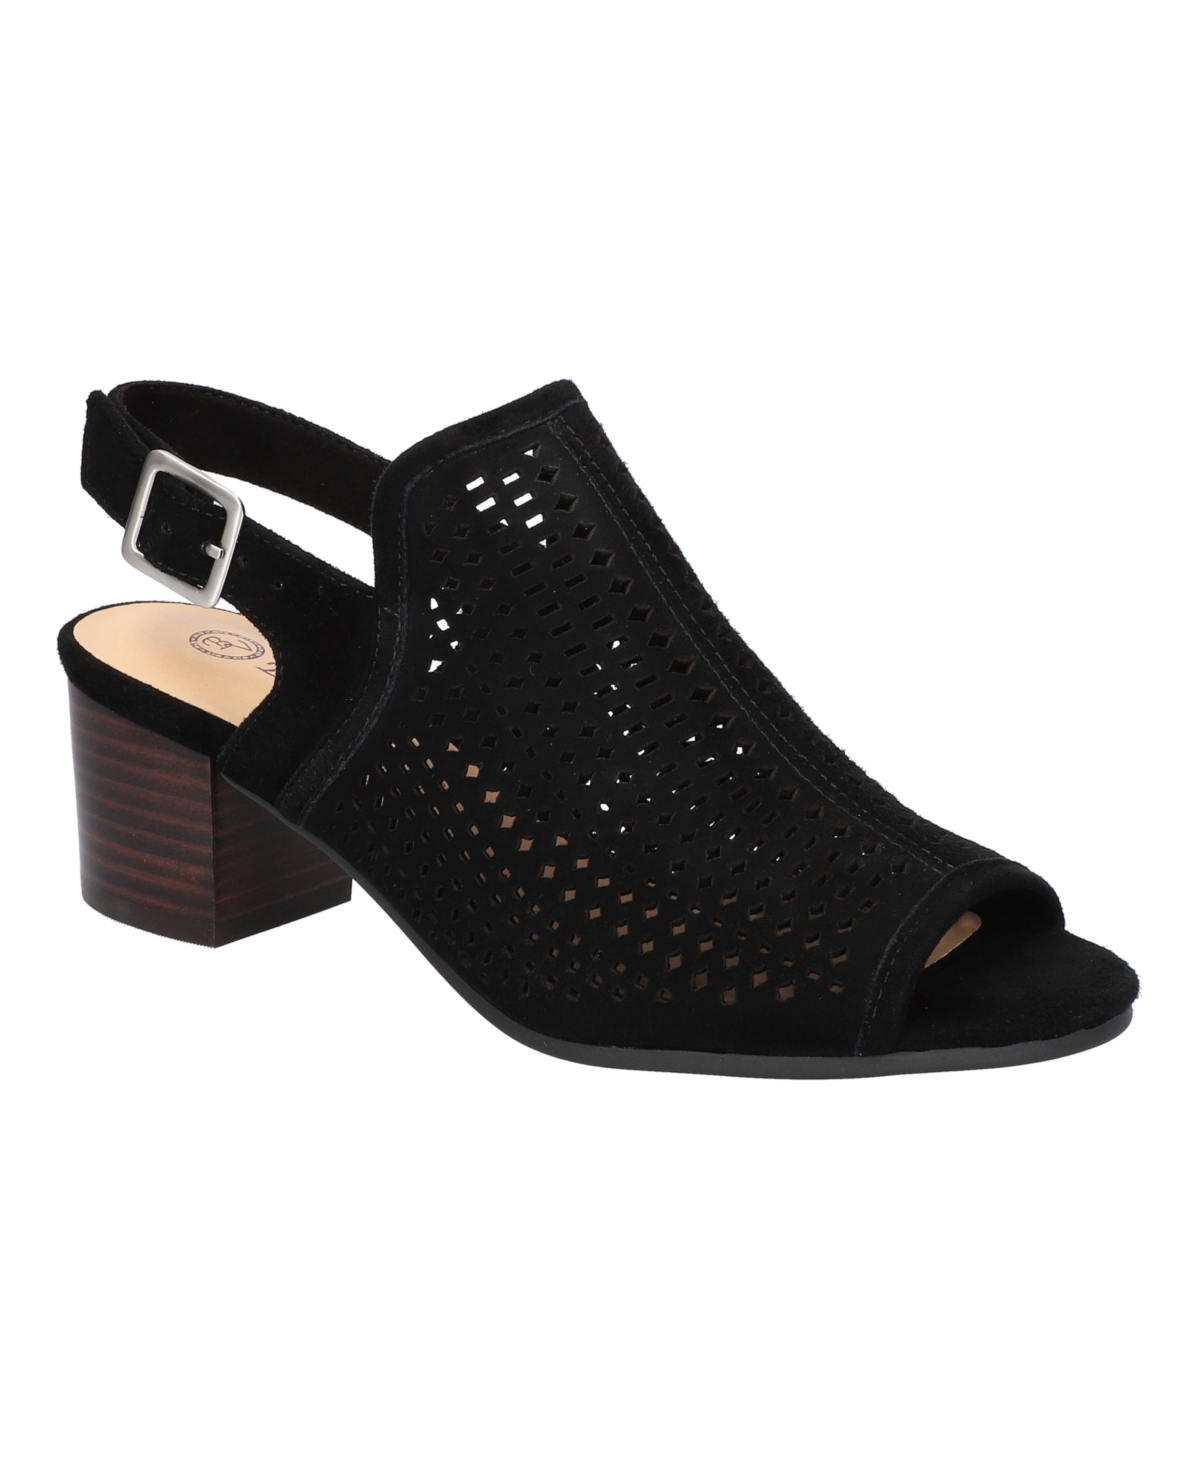 Women's Emmalyn Block Heel Sandals - Dark Tan Suede Leather